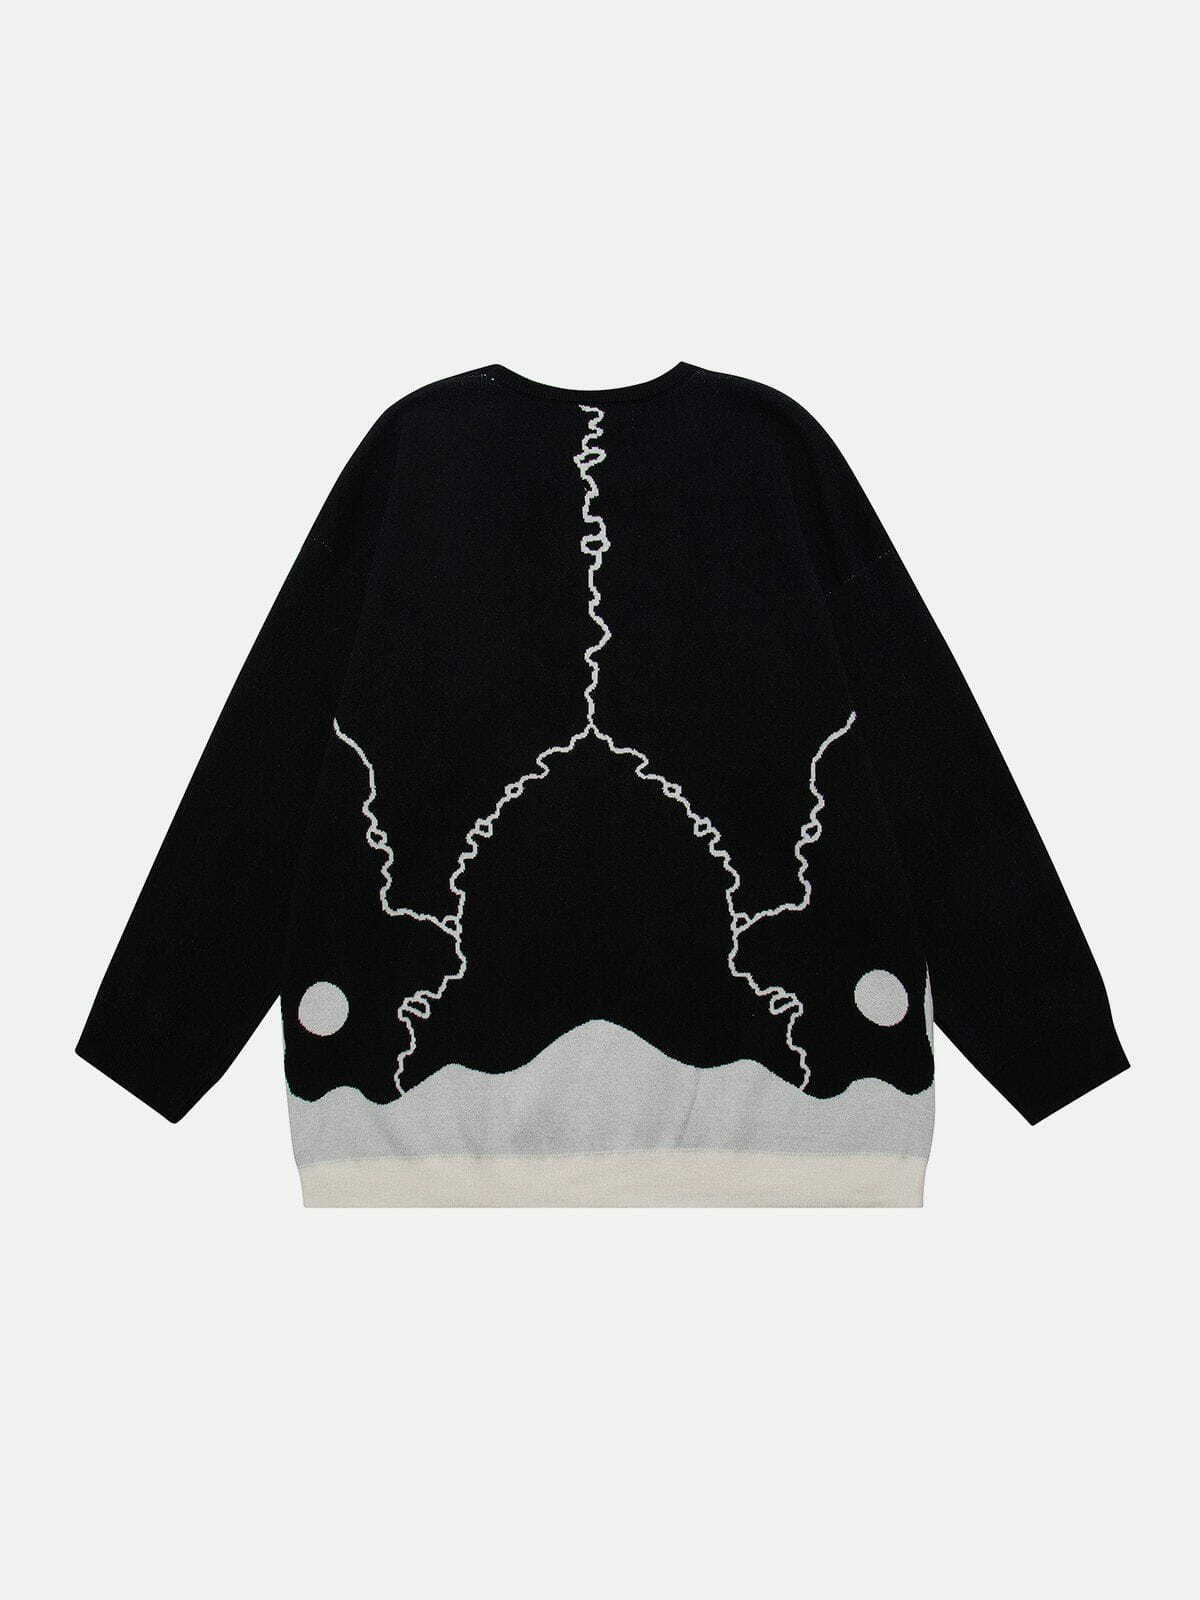 skull colorblock sweater edgy streetwear essential 3445